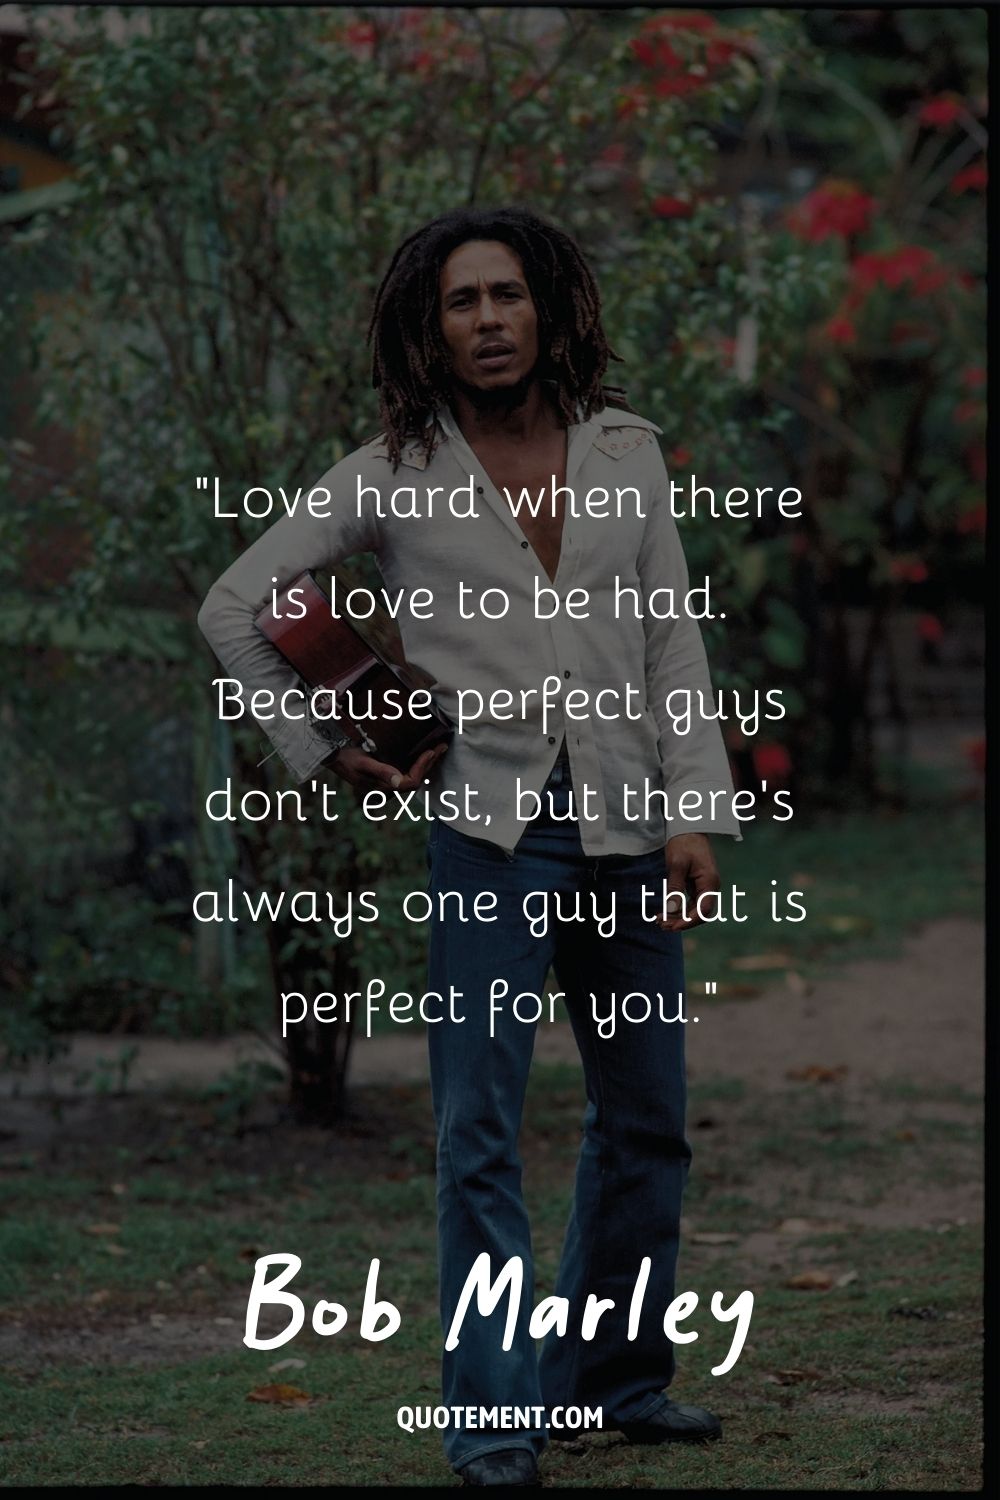 Bob Marley posing in a white shirt and denim pants
